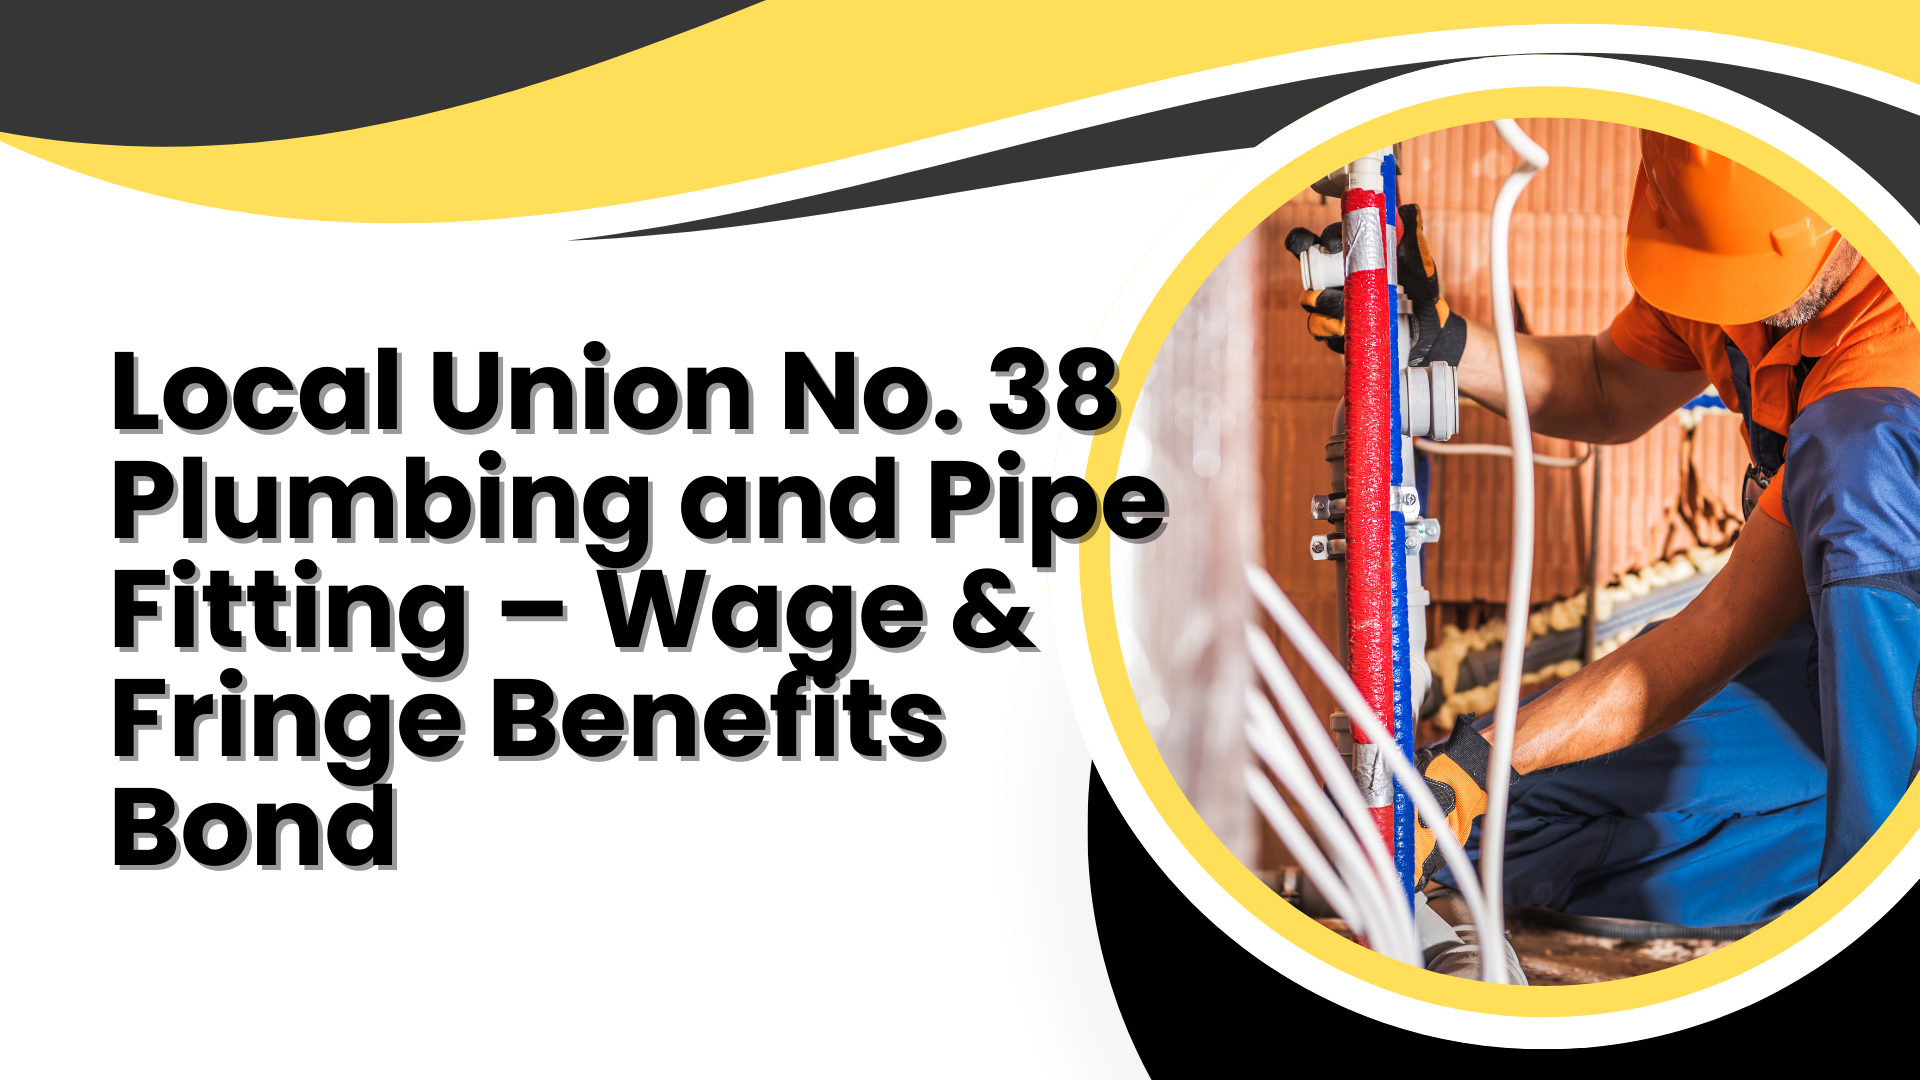 Surety Bond - Local Union No. 38 Plumbing and Pipe Fitting – Wage & Fringe Benefits Bond